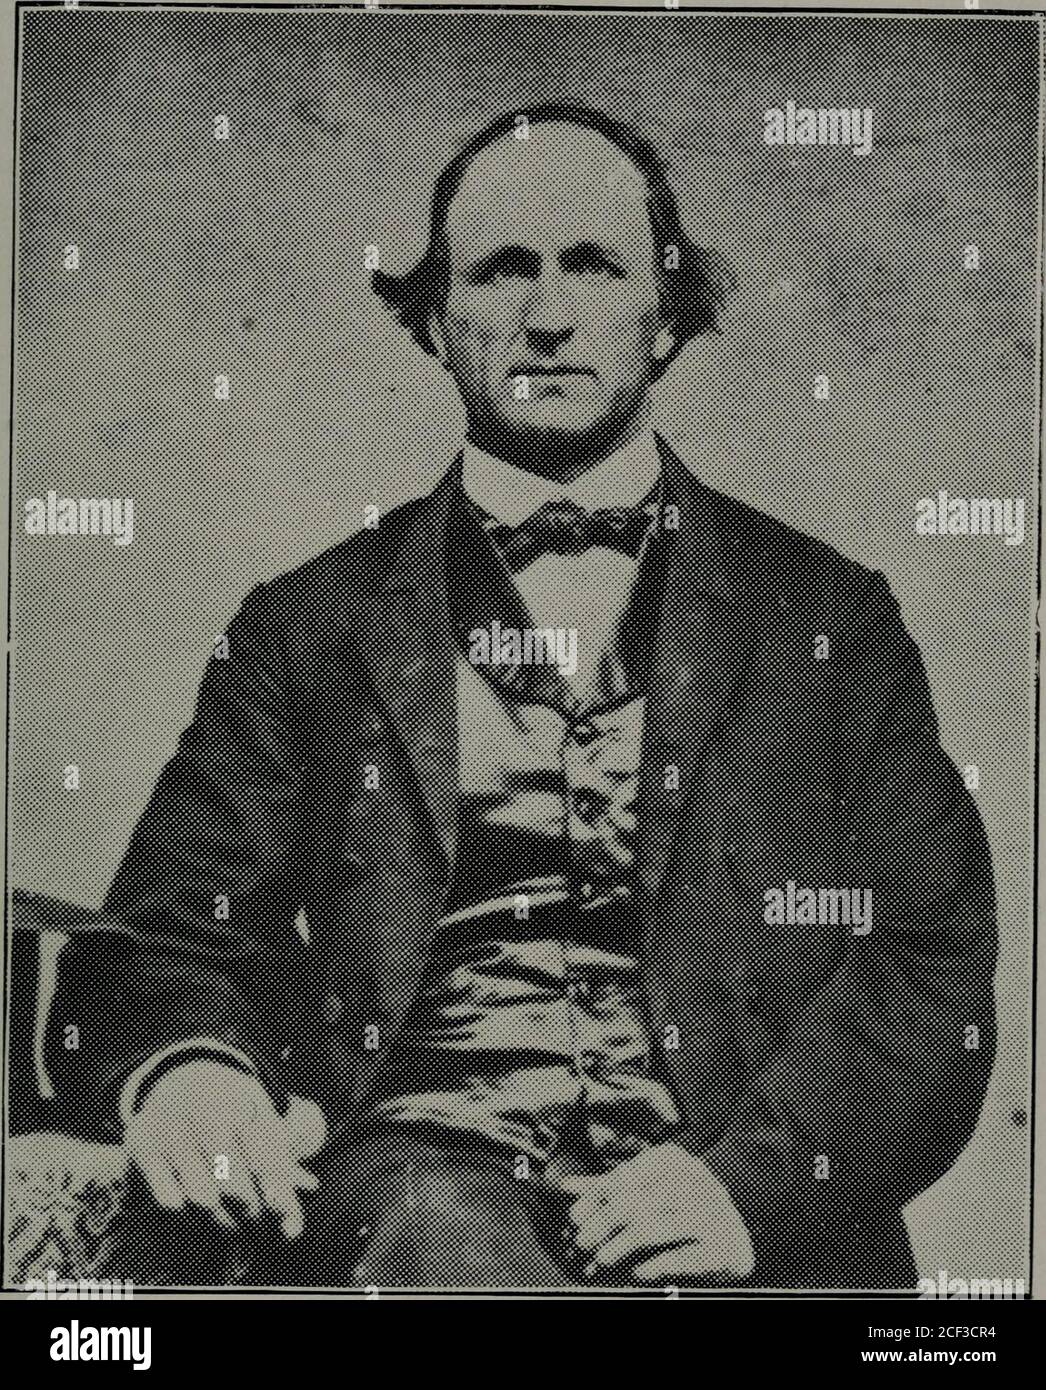 . Atwater history and genealogy. ., b. Mar. 12, 1860; d. June 12, 1862. 2204. Laura M., b. Jan. 7, 1865. 2205. Charles S., b. Nov. 15, 1866; unm. In mining business in state of Washington. 2206. Louise C, b. Aug. 6, 1868. 2207. James R., b. Sept. 1, 1880. 1493. Asa, son of Daniel, m. Dec. 25, 1877, Susan M. Brown. Theylive at Wells, Yt. No children. 1502. Lyman, son of Stephen; m. Jane, dau. of Ephraim Gil more andLaura Ingraham, b, Nov. 17, 1822; d. June 27, 1882. He was a farmerat Ludlow, Vt. No children. 1506. Elnathan Reynolds, son of John; m. April 15, 1858, Rosa Pa-tience, dau. of John P Stock Photo